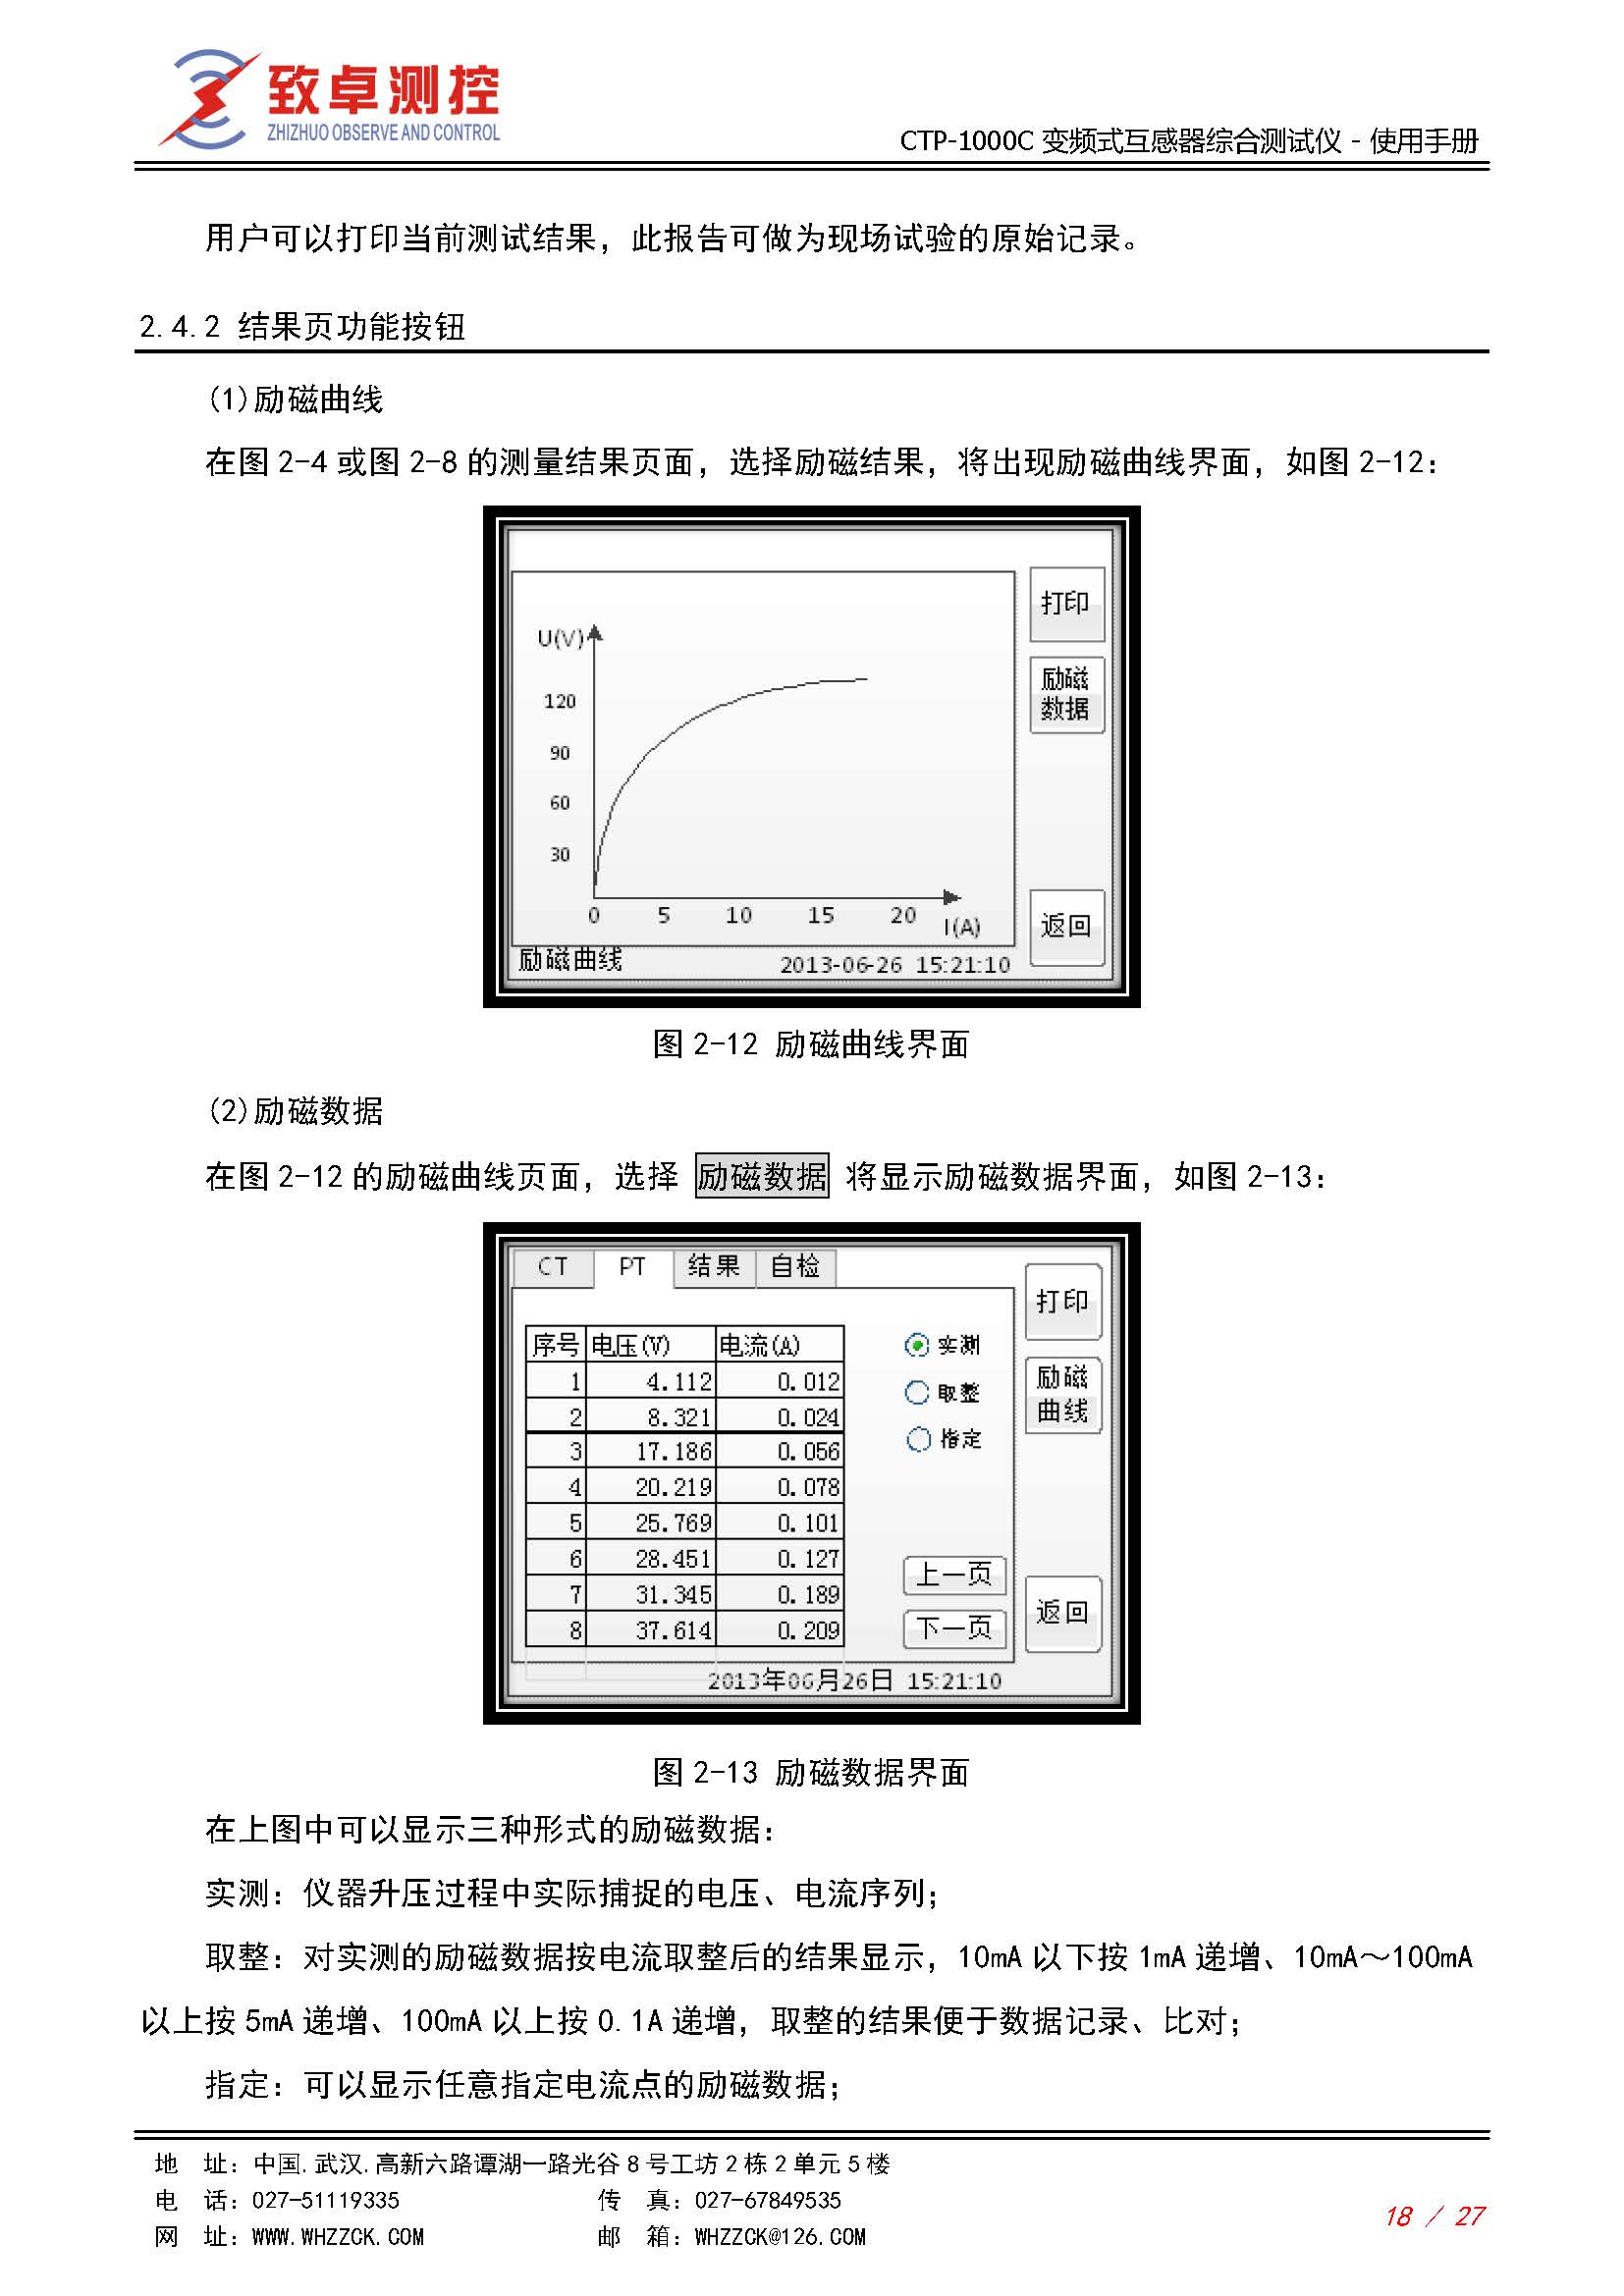 CTP-1000C 变频式互感器综合测试仪使用说明书(图18)